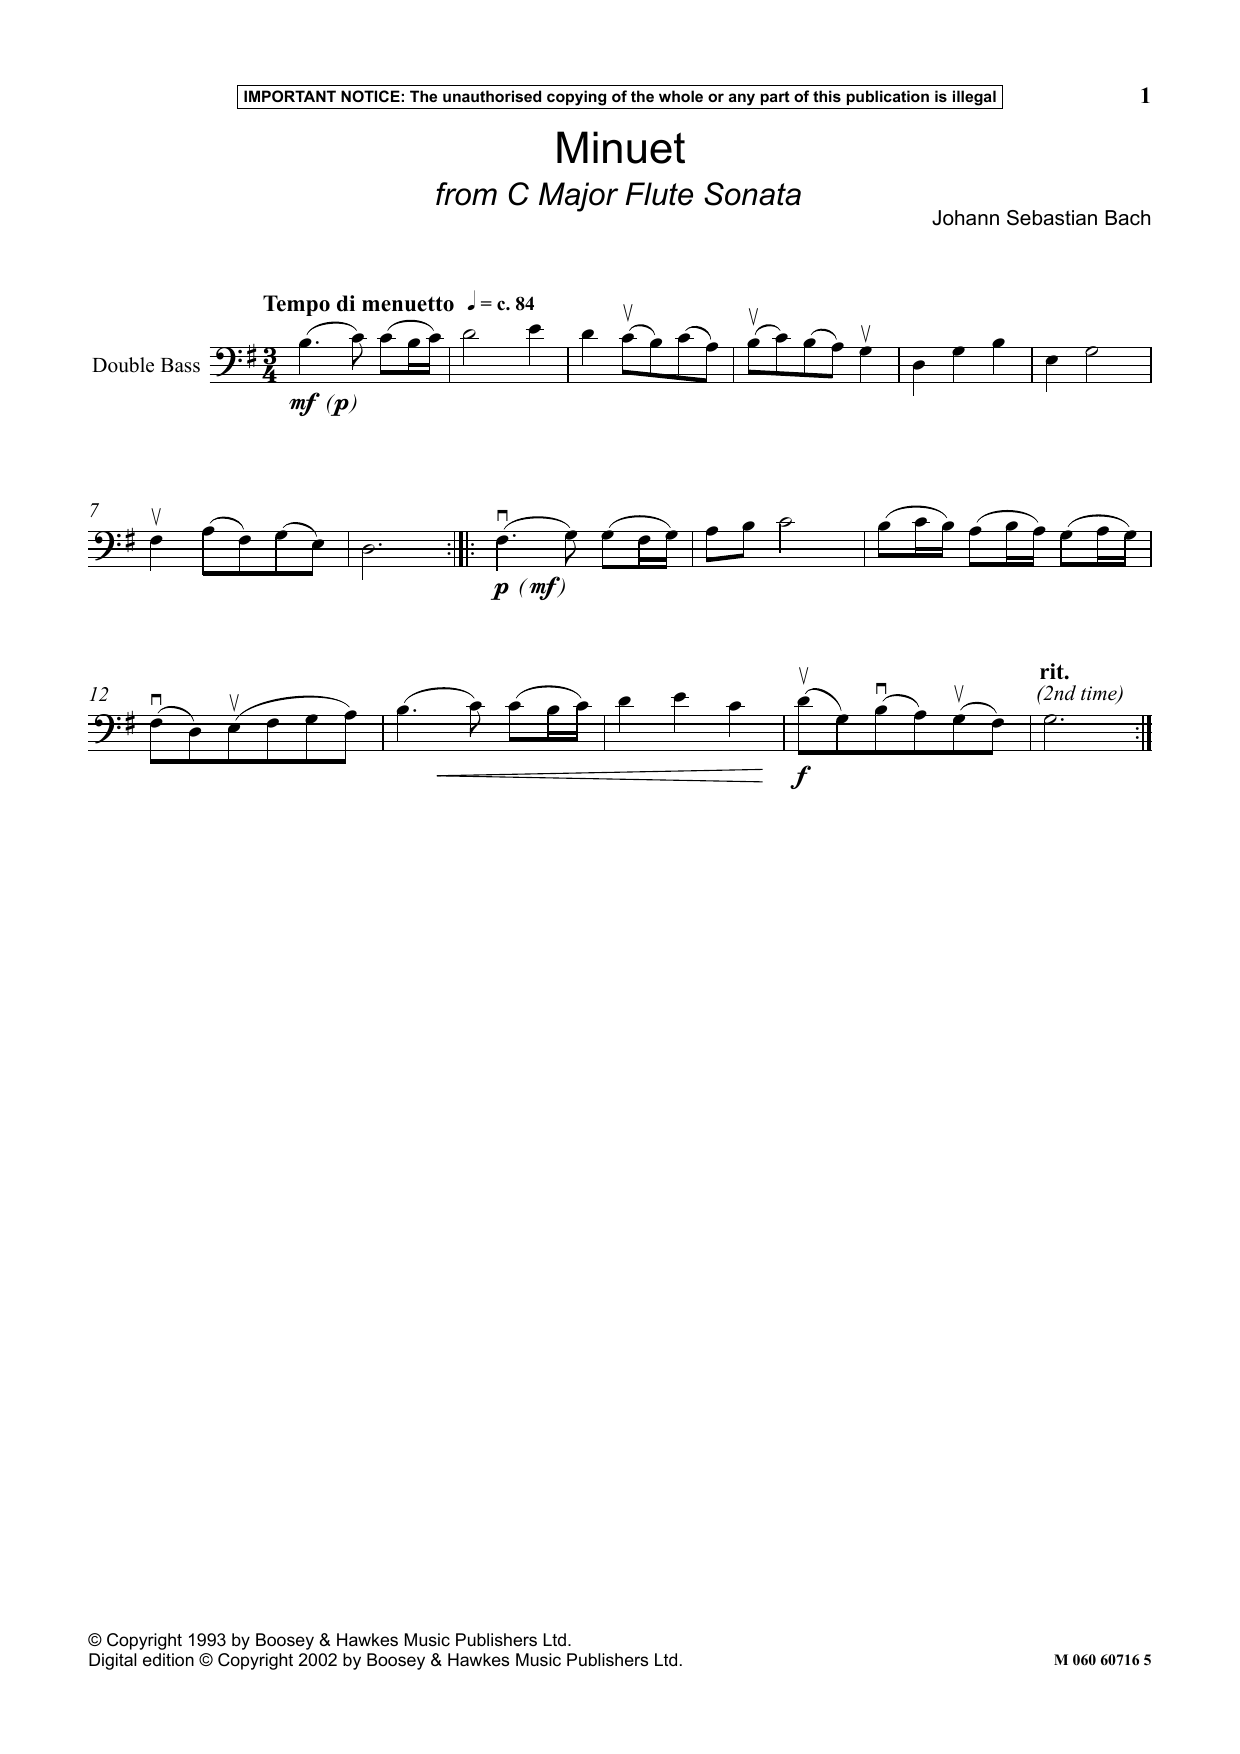 Johann Sebastian Bach Minuet (from C Major Flute Sonata) sheet music notes and chords arranged for Instrumental Solo